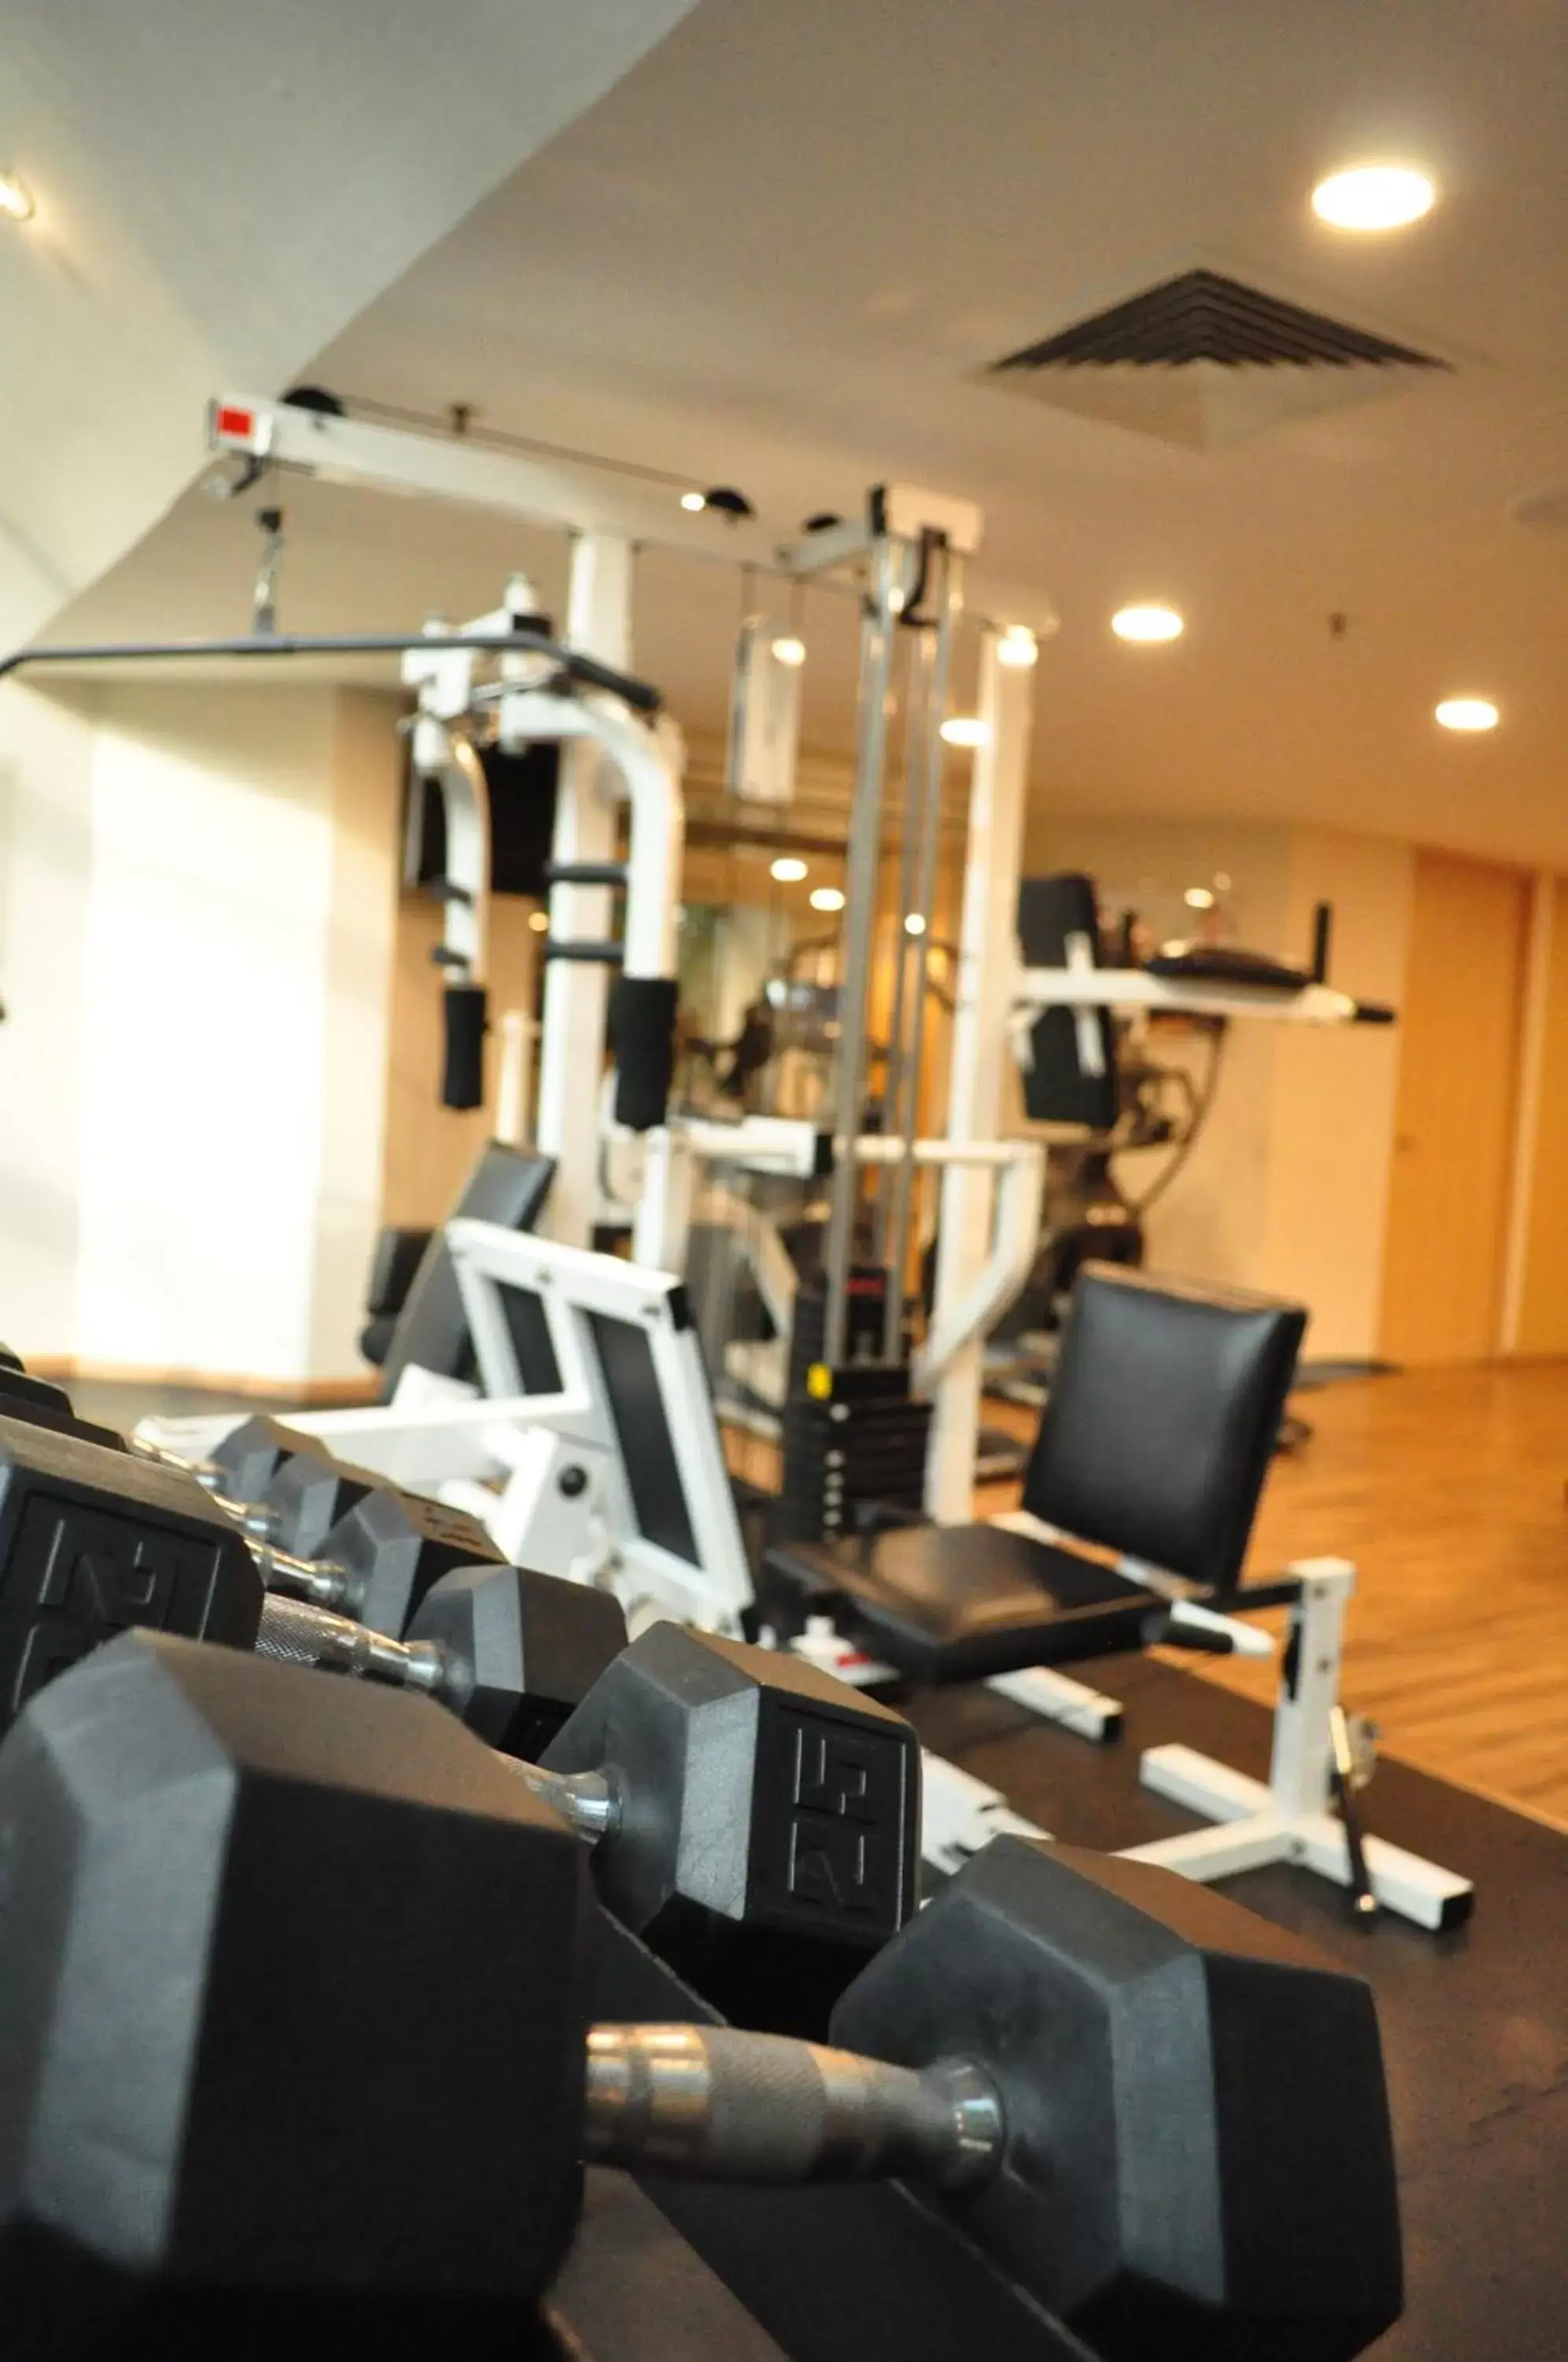 Fitness centre/facilities, Fitness Center/Facilities in Radisson Paraiso Perisur